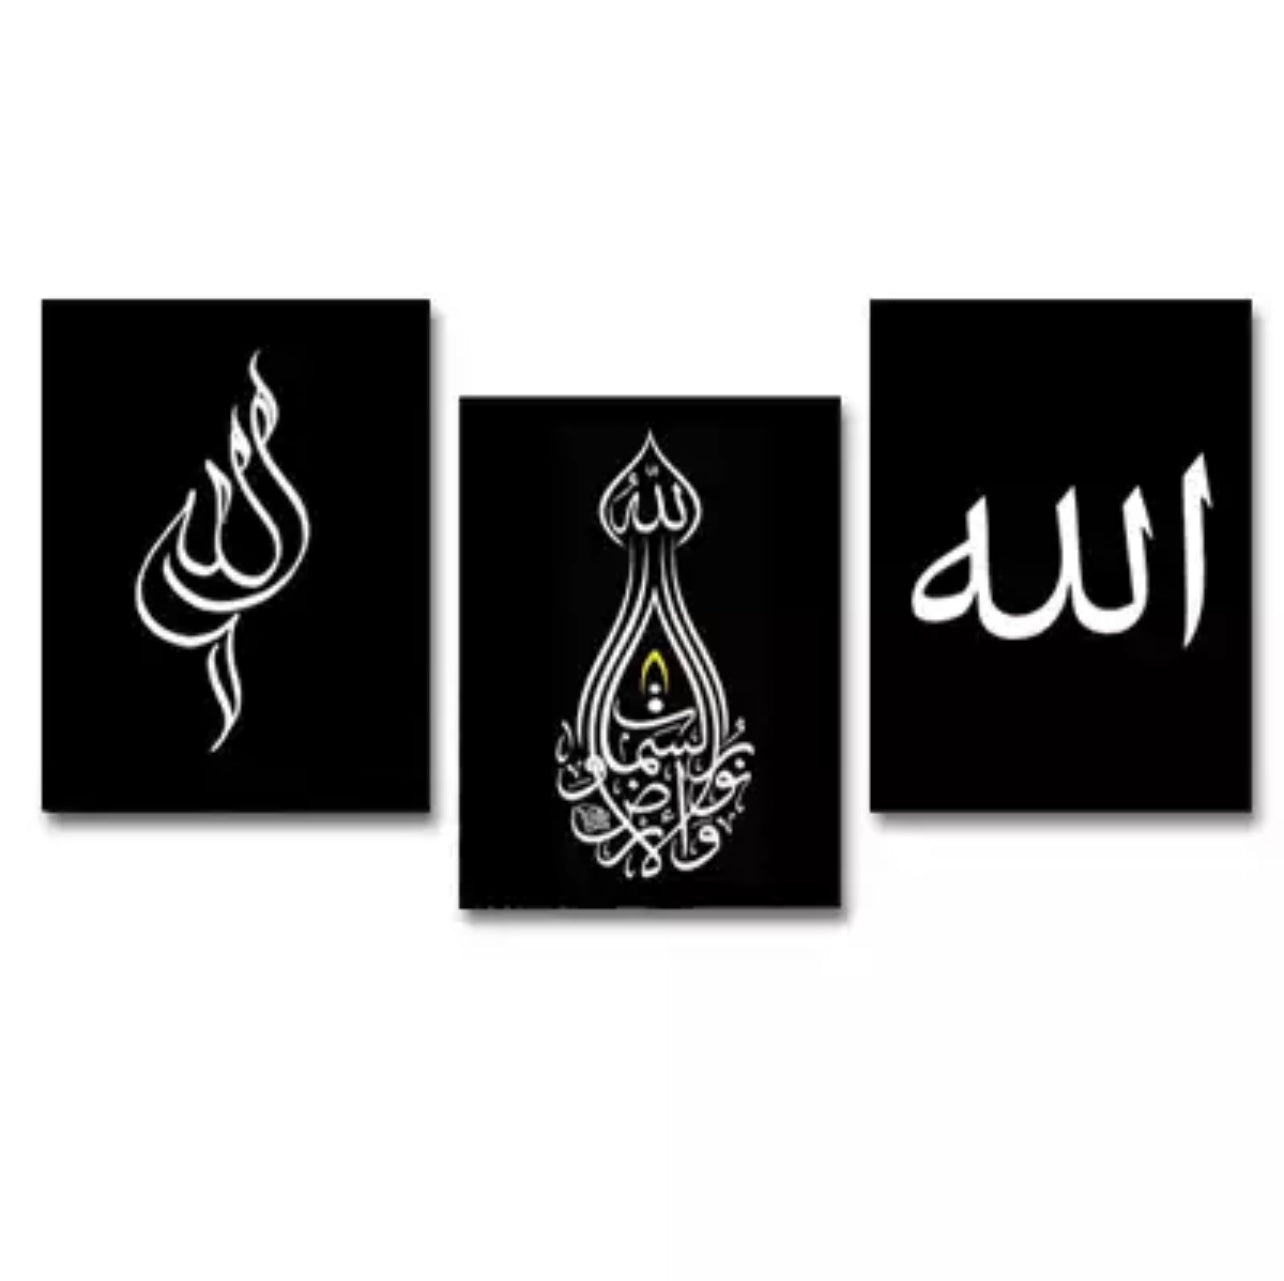 Simple Minimalist Black With White Brushed Islamic Calligraphy